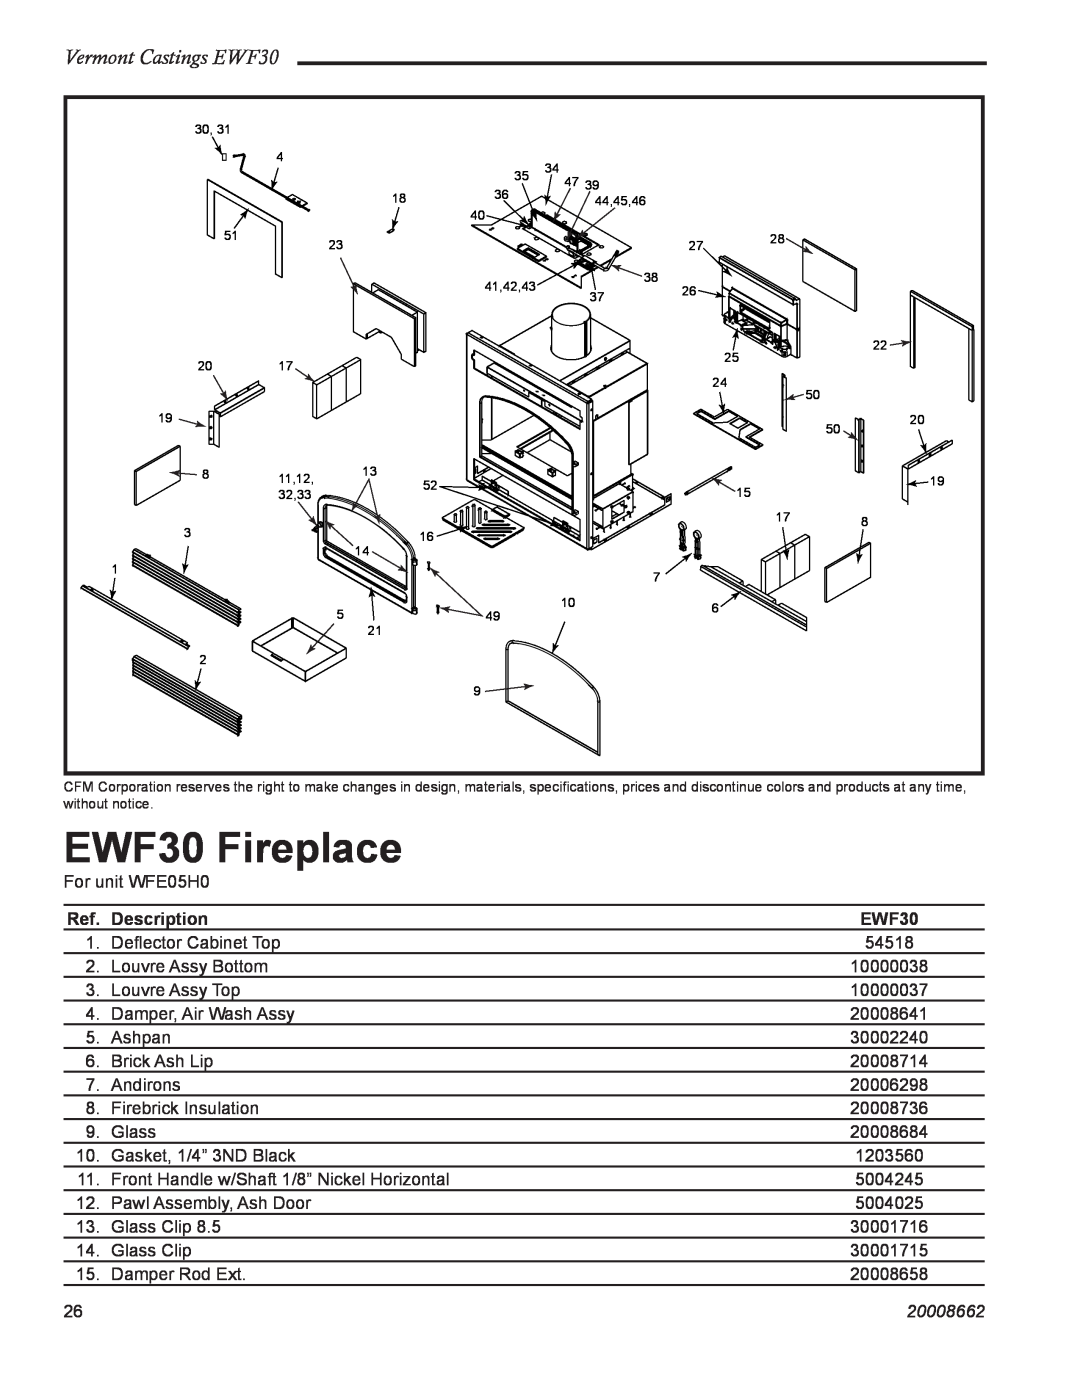 Vermont Casting installation instructions EWF30 Fireplace, Vermont Castings EWF30, Description, 20008662 